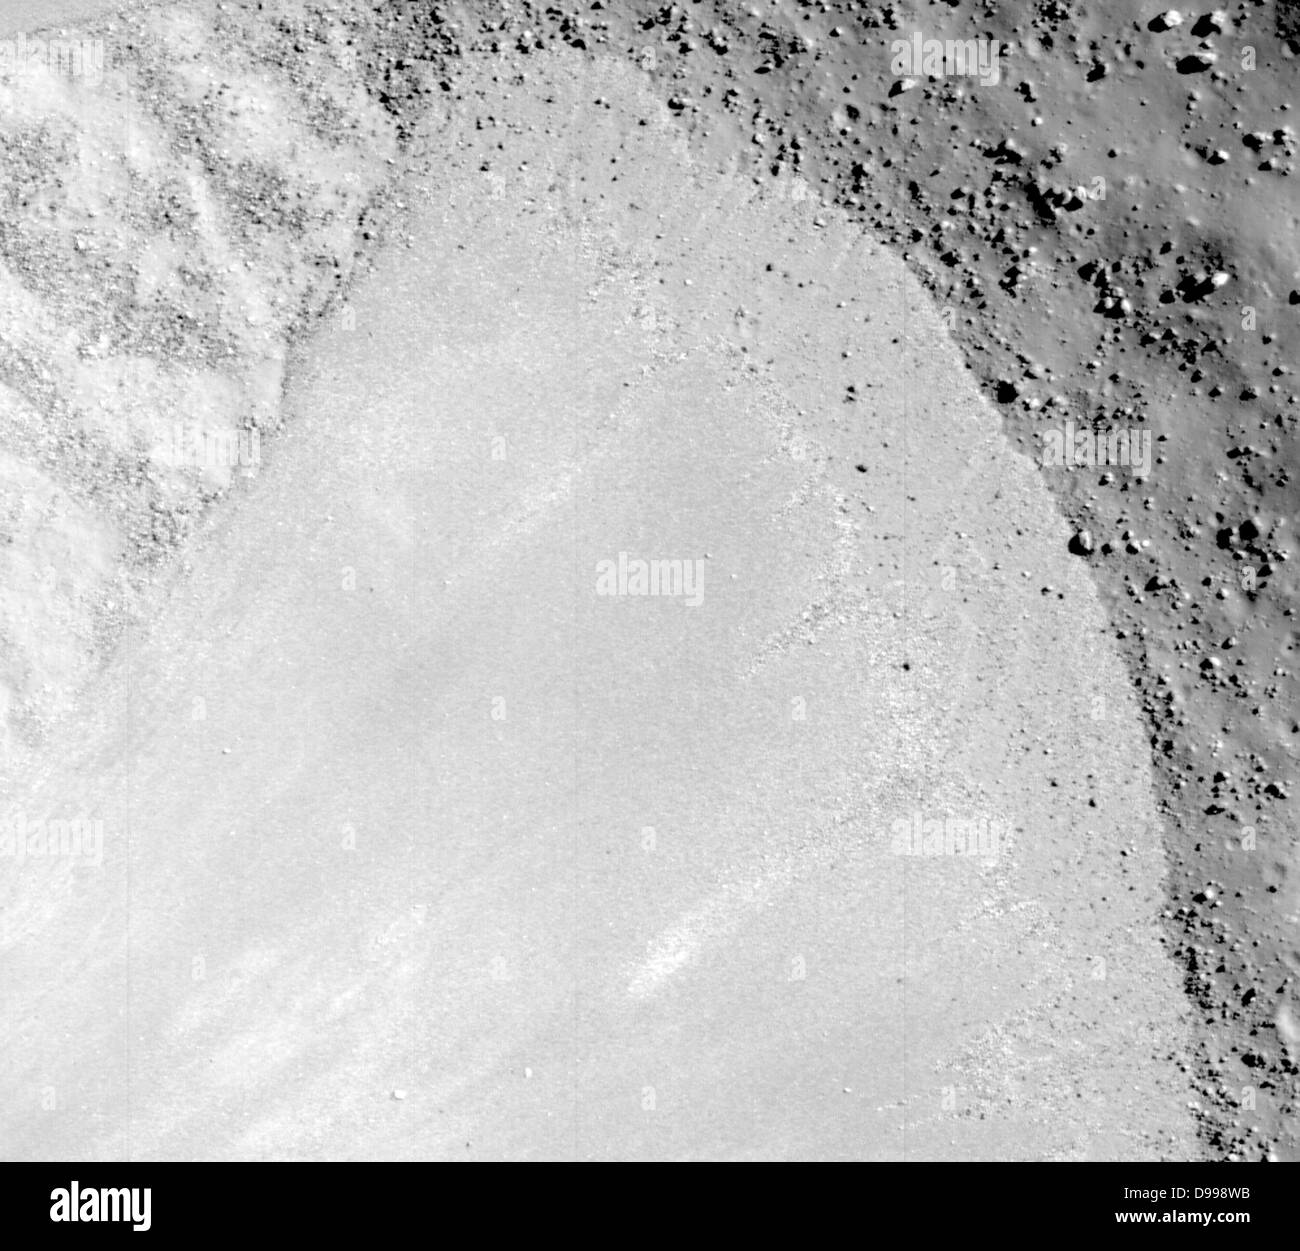 Debris flow extending down the southwest wall of Janssen K crater. Stock Photo